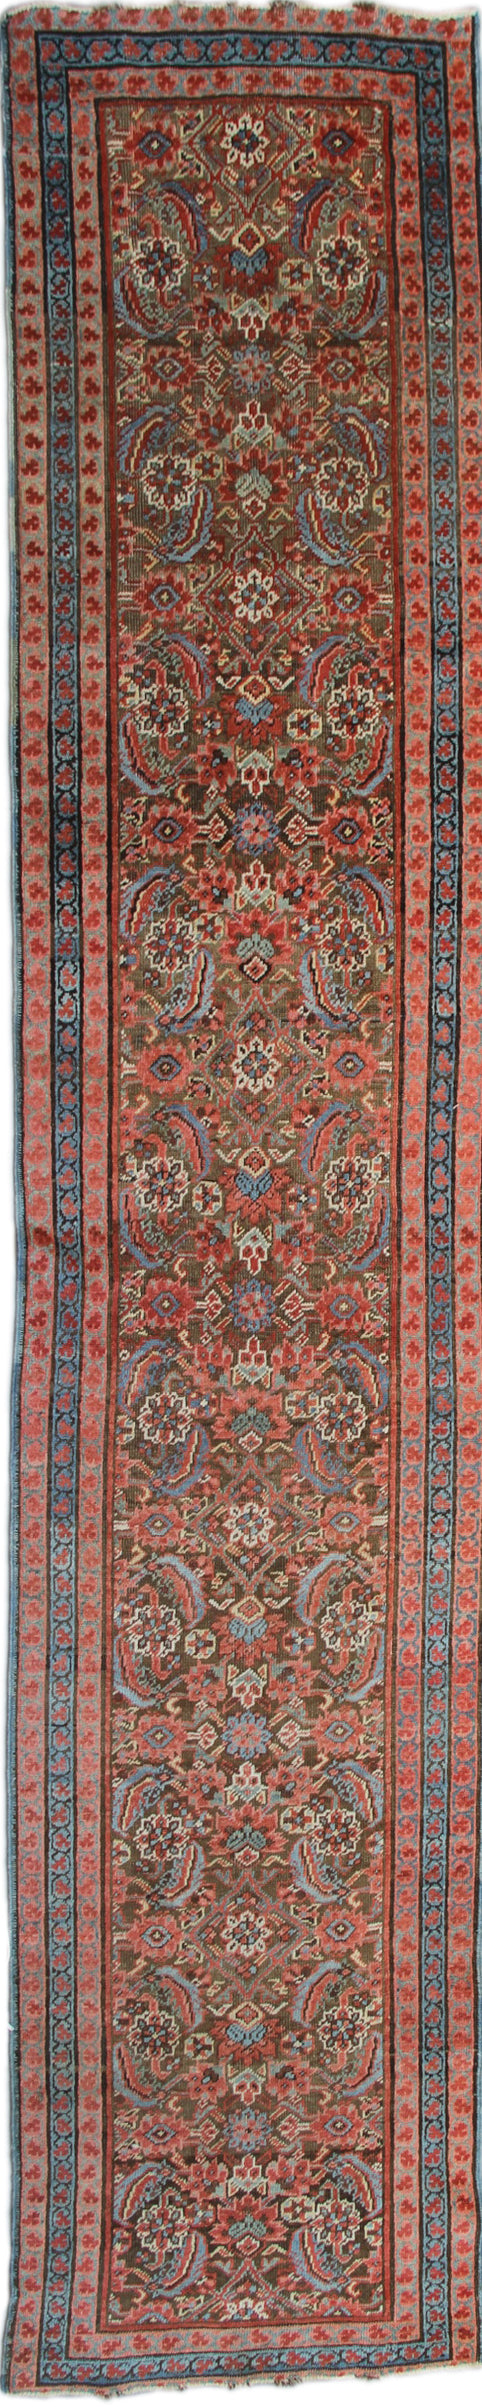 3'x12' Persian Antique Runner Rug